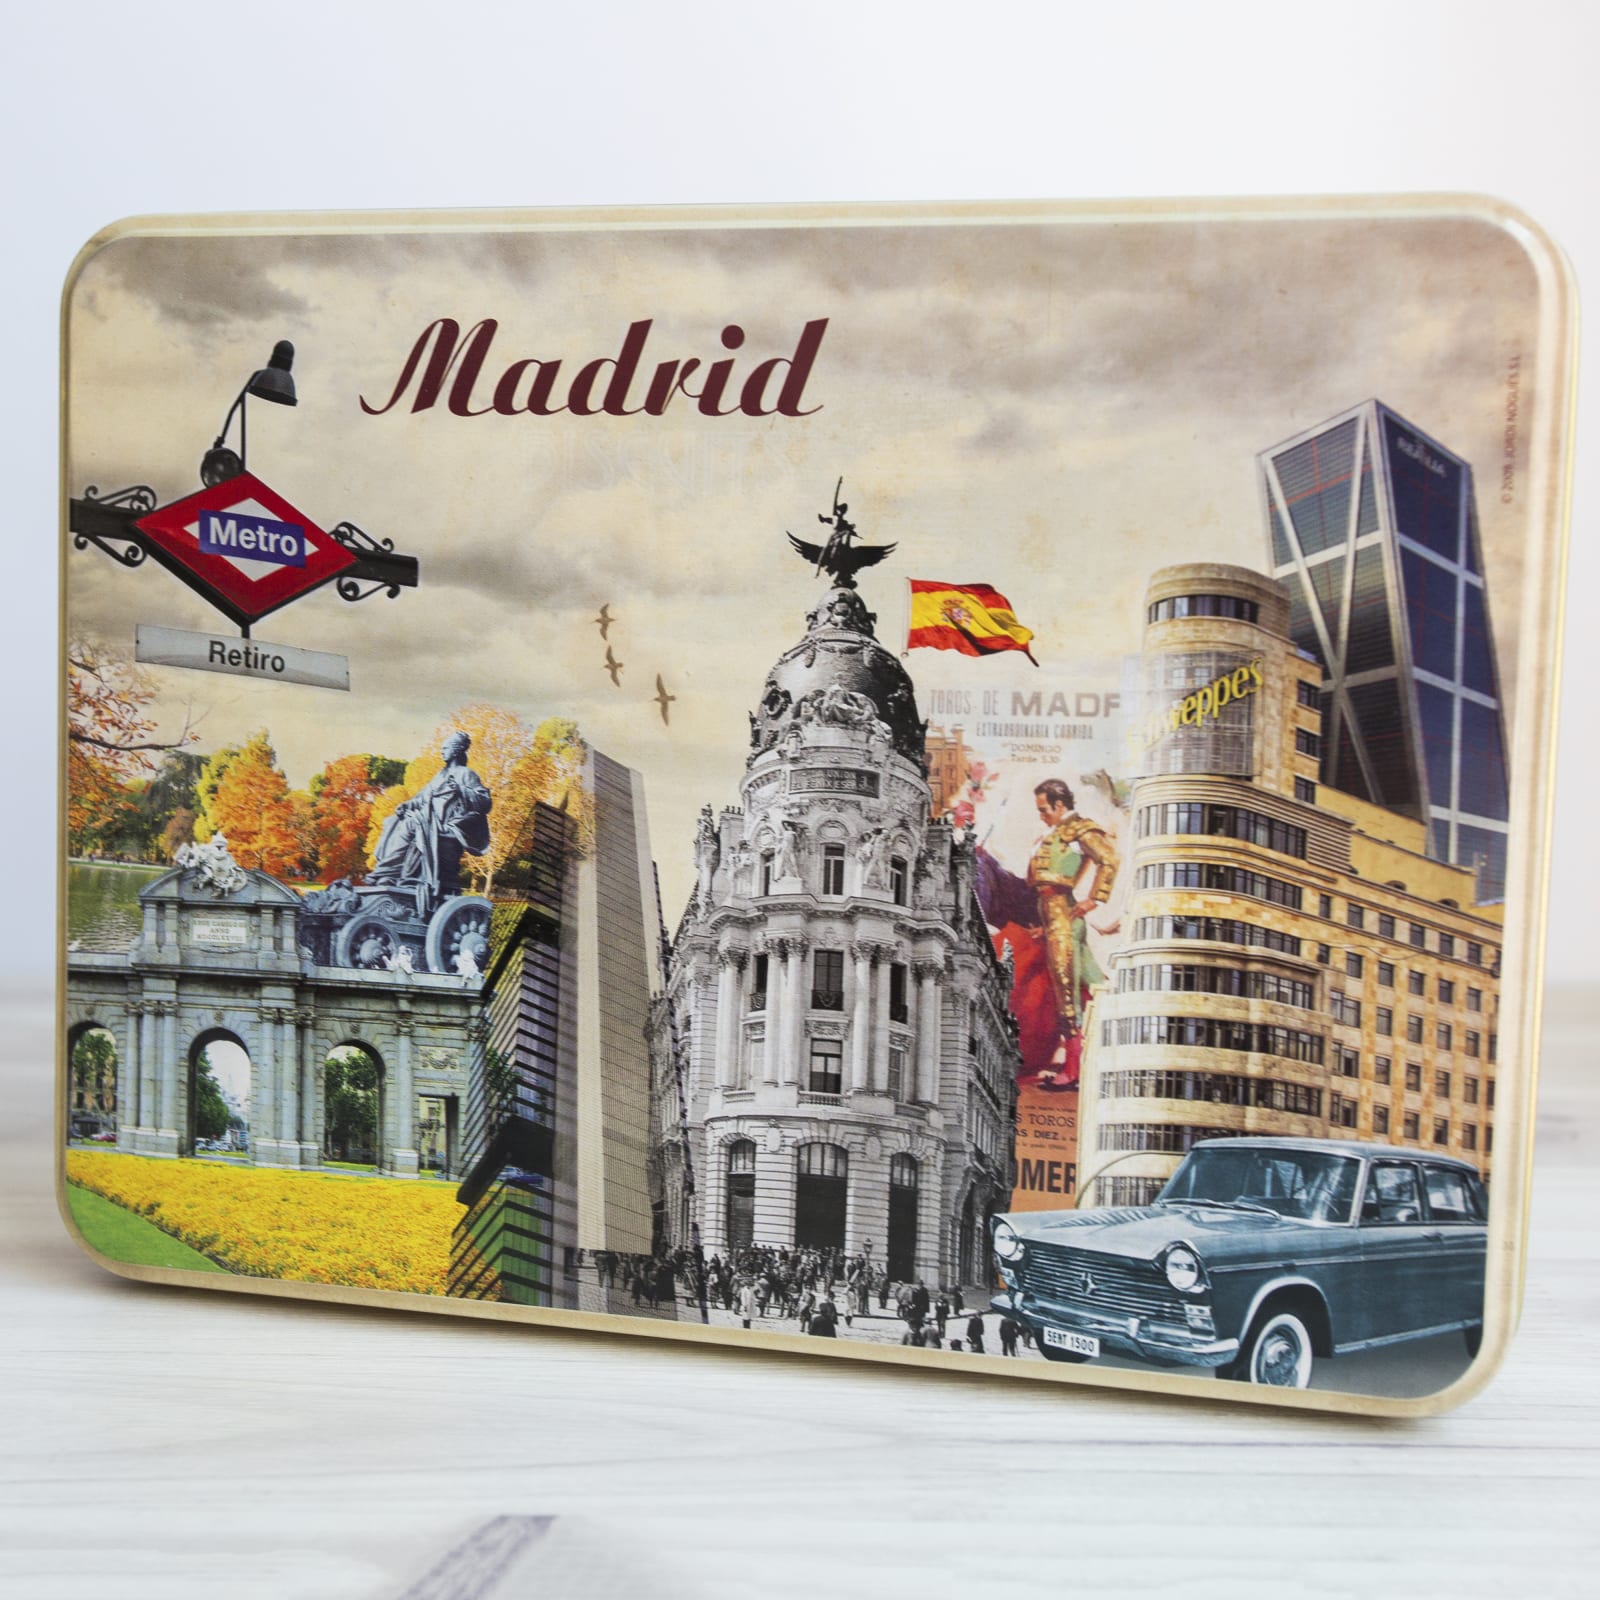 Barcelona & Madrid Fridge Magnets - Scenic Spanish City Souvenirs